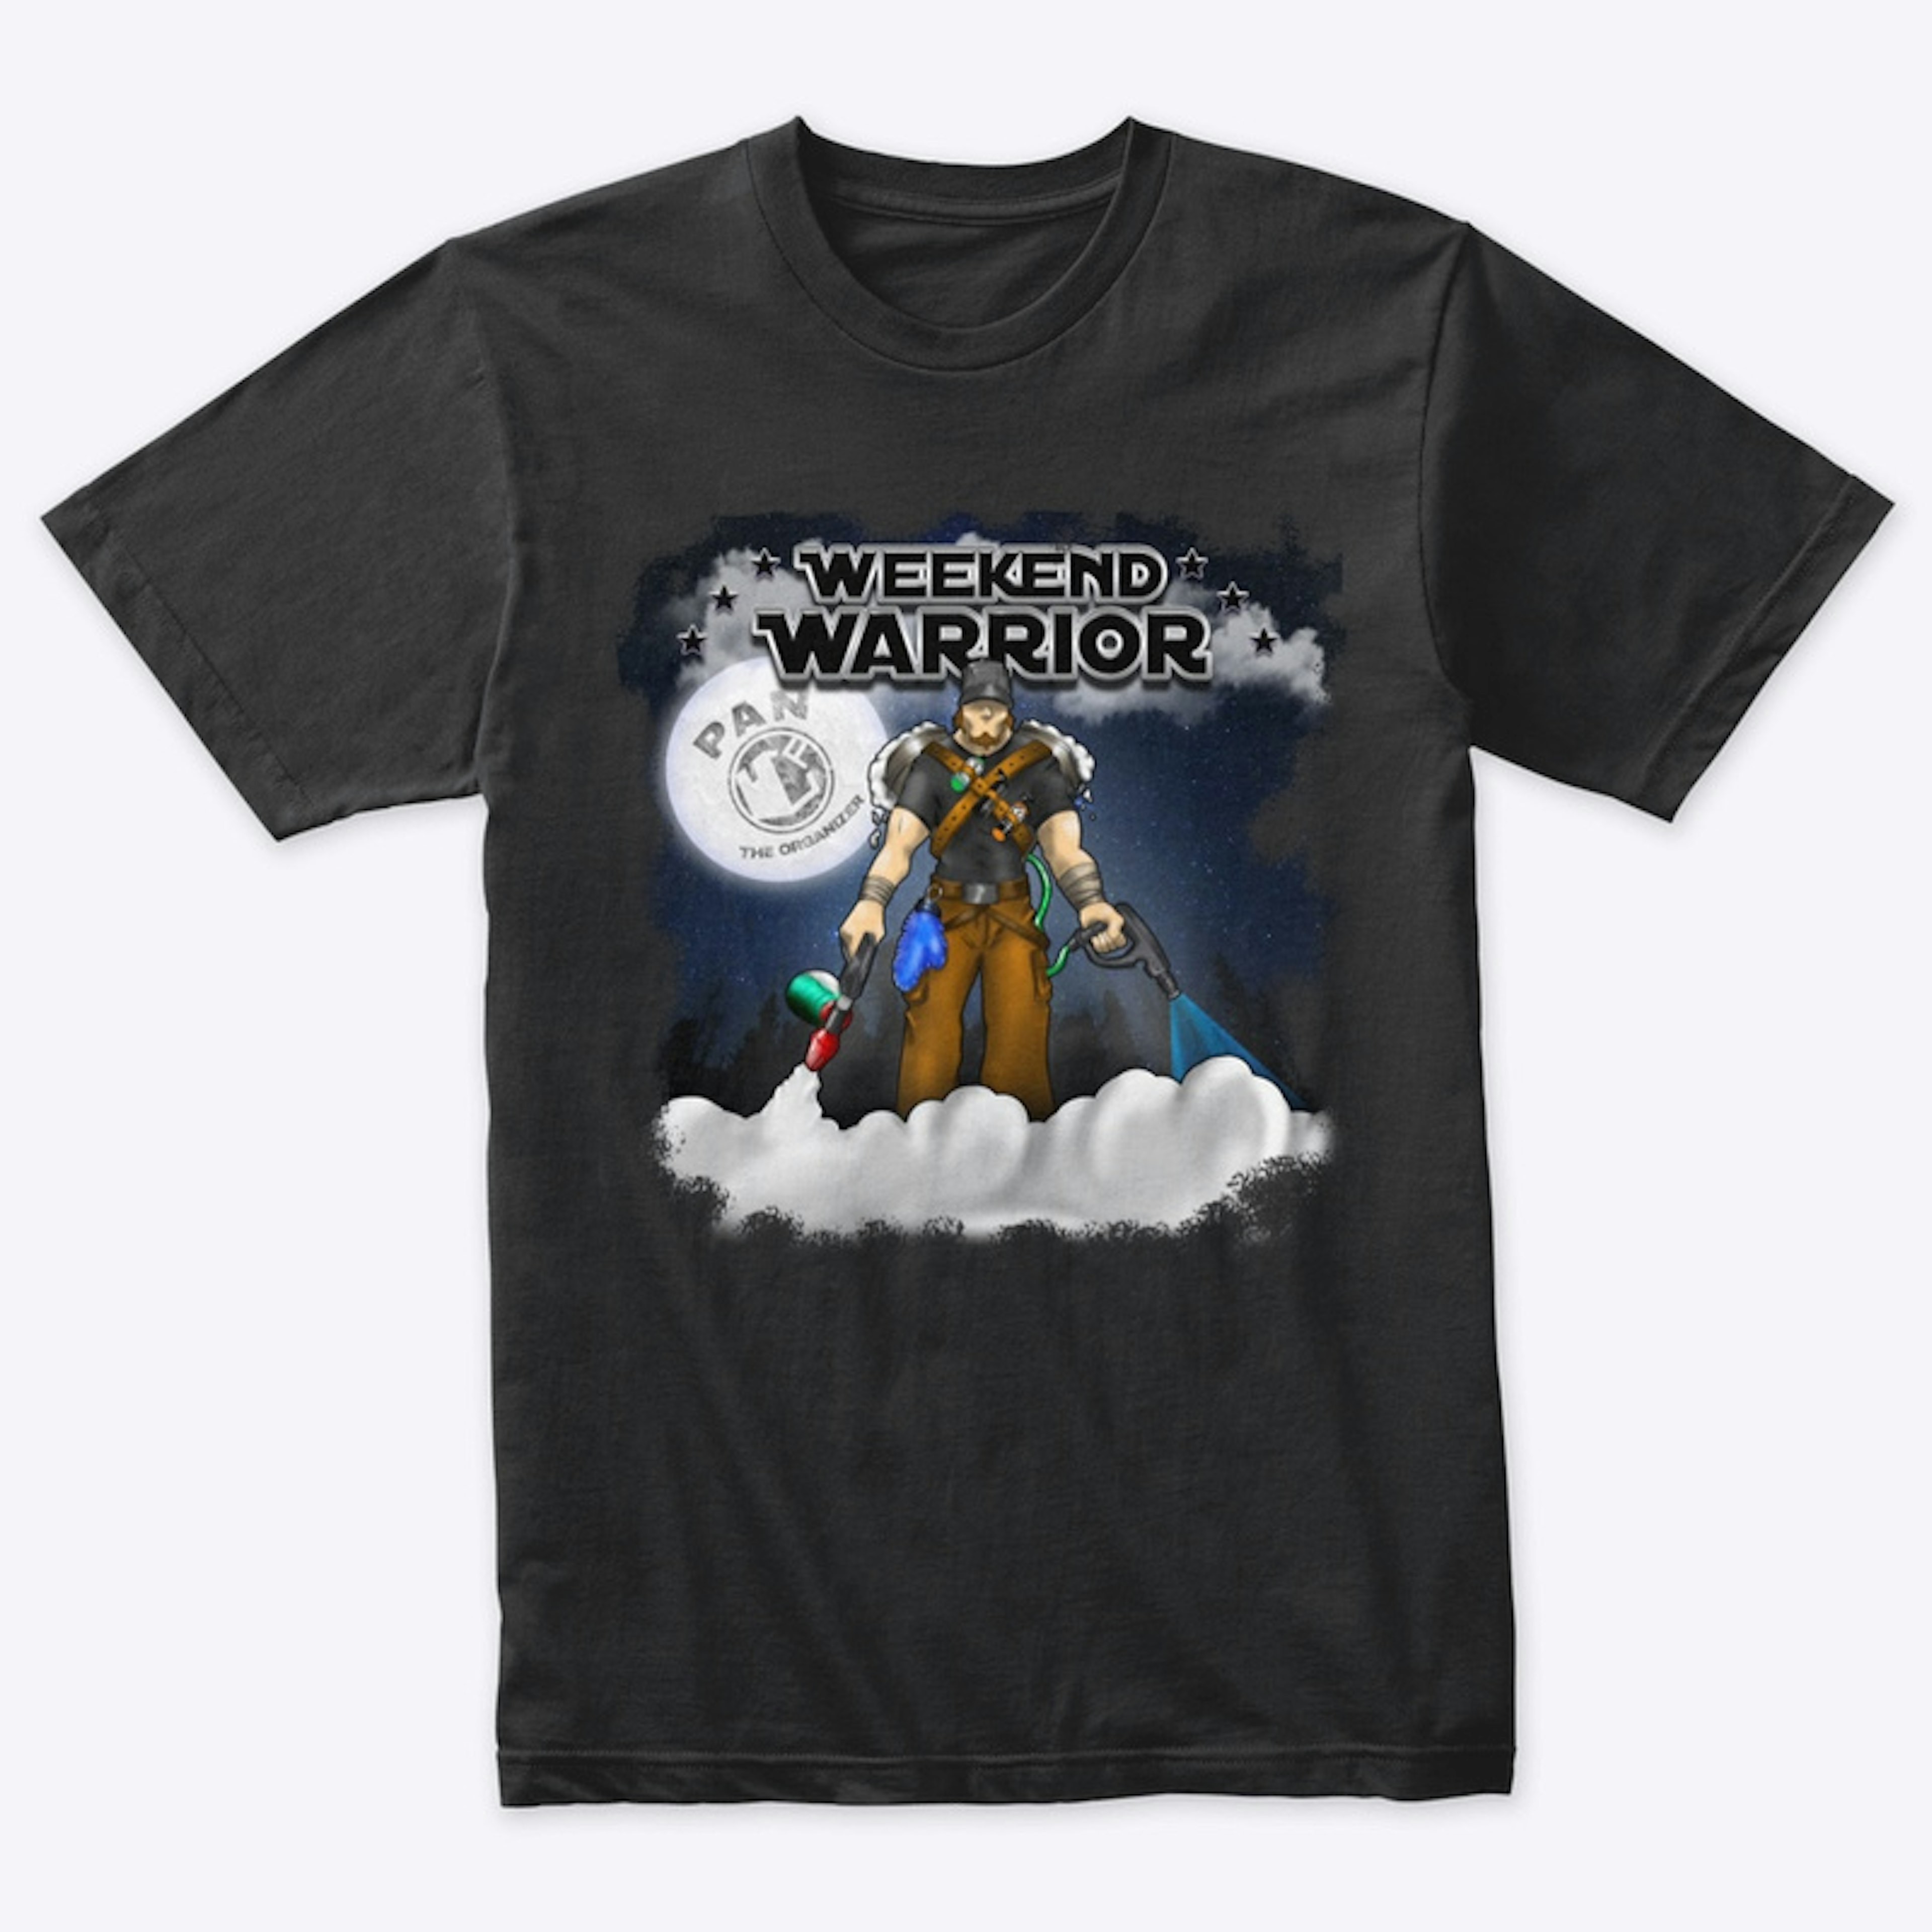 Weekend Warrior (Premium quality shirt)